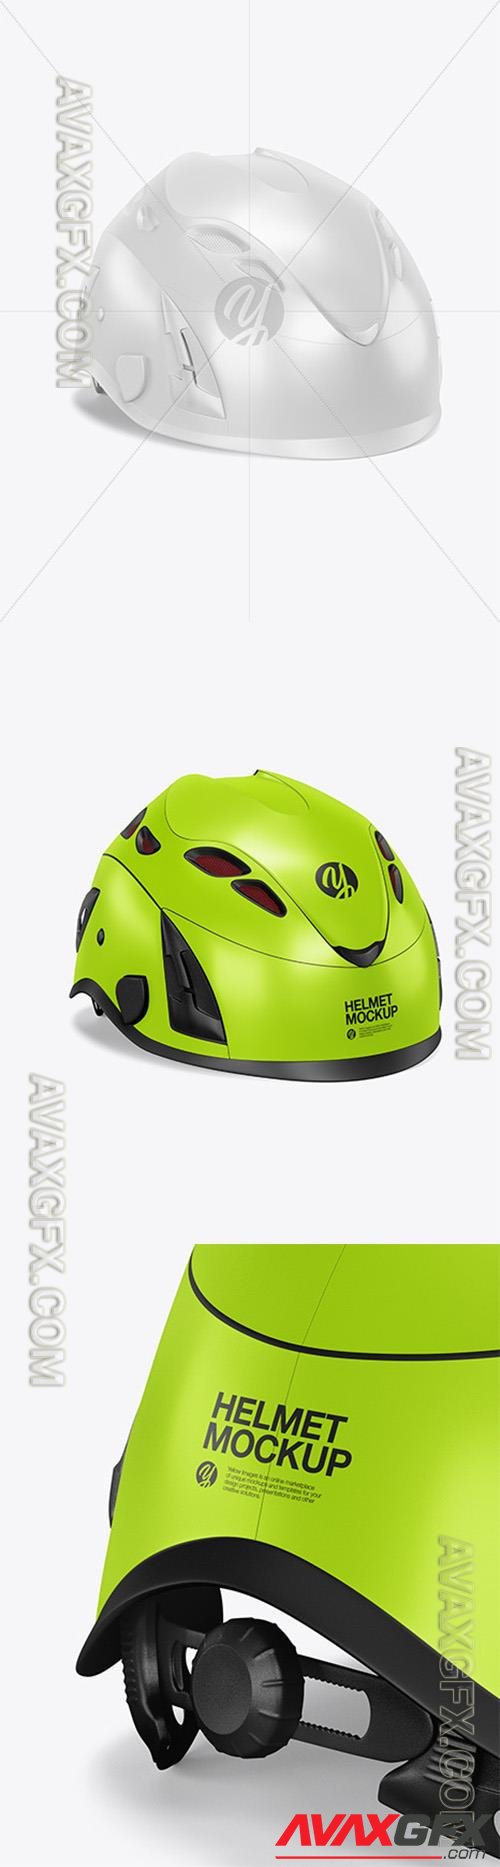 Cycling Helmet Mockup 75304